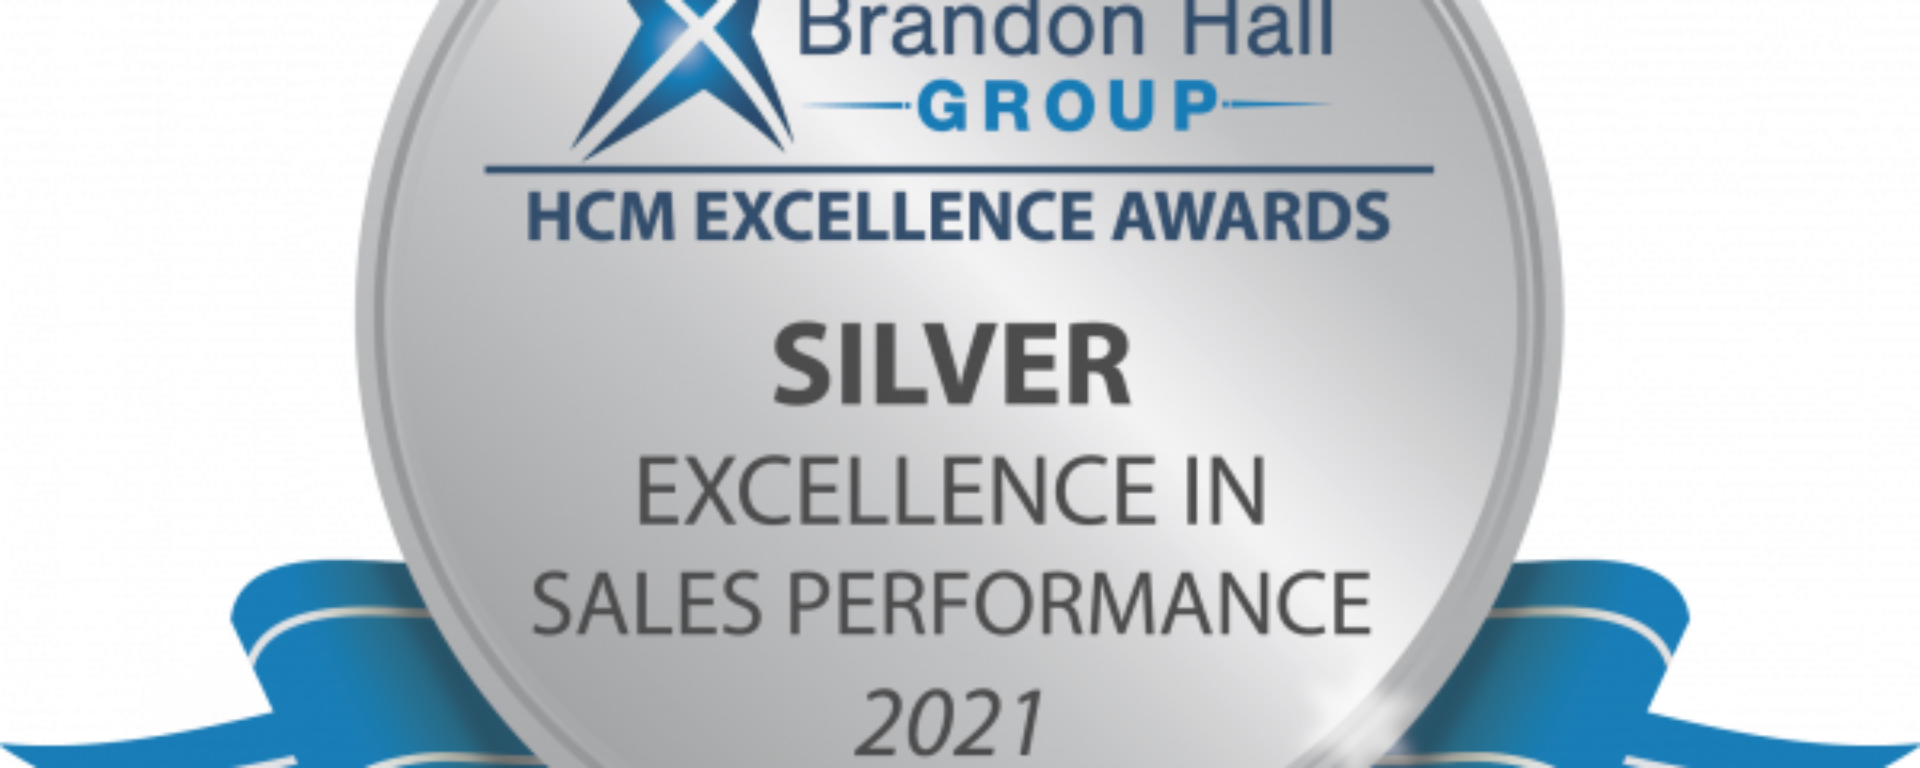 transdev-remporte-brandon-hall-group-hcm-excellence-silver-award